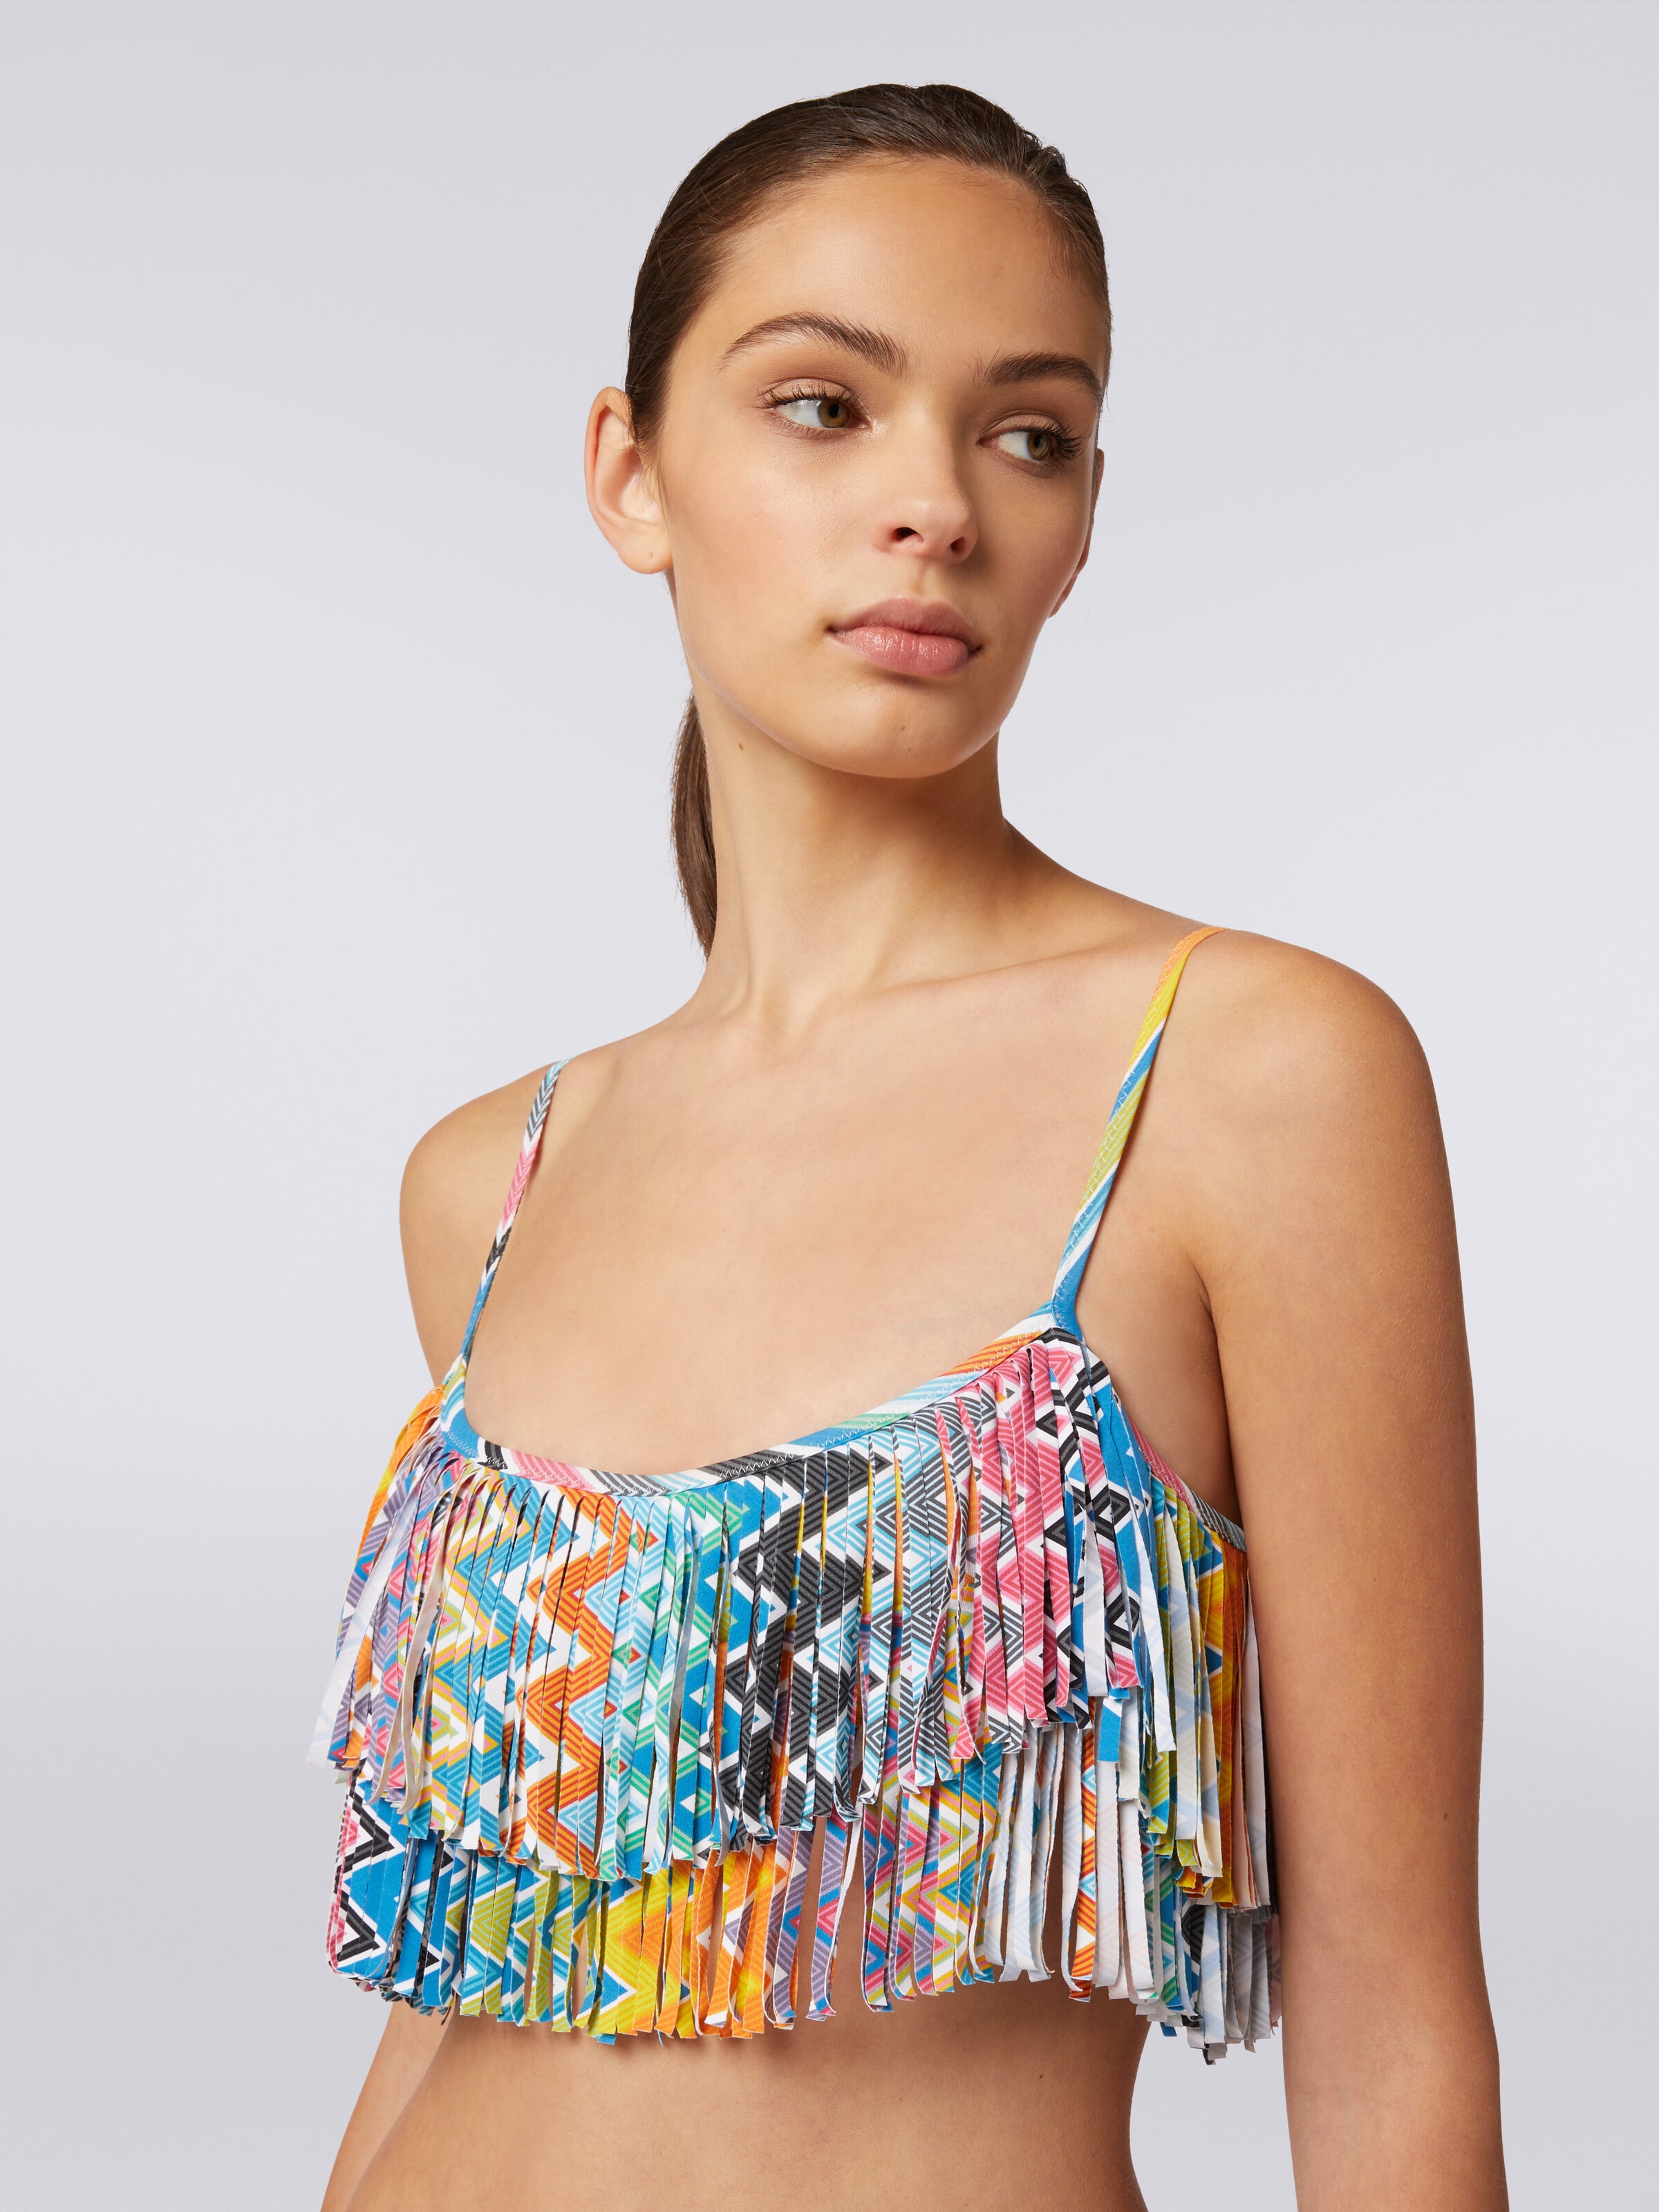 Printed stretch fabric bikini with fringed top, Multicoloured  - 4